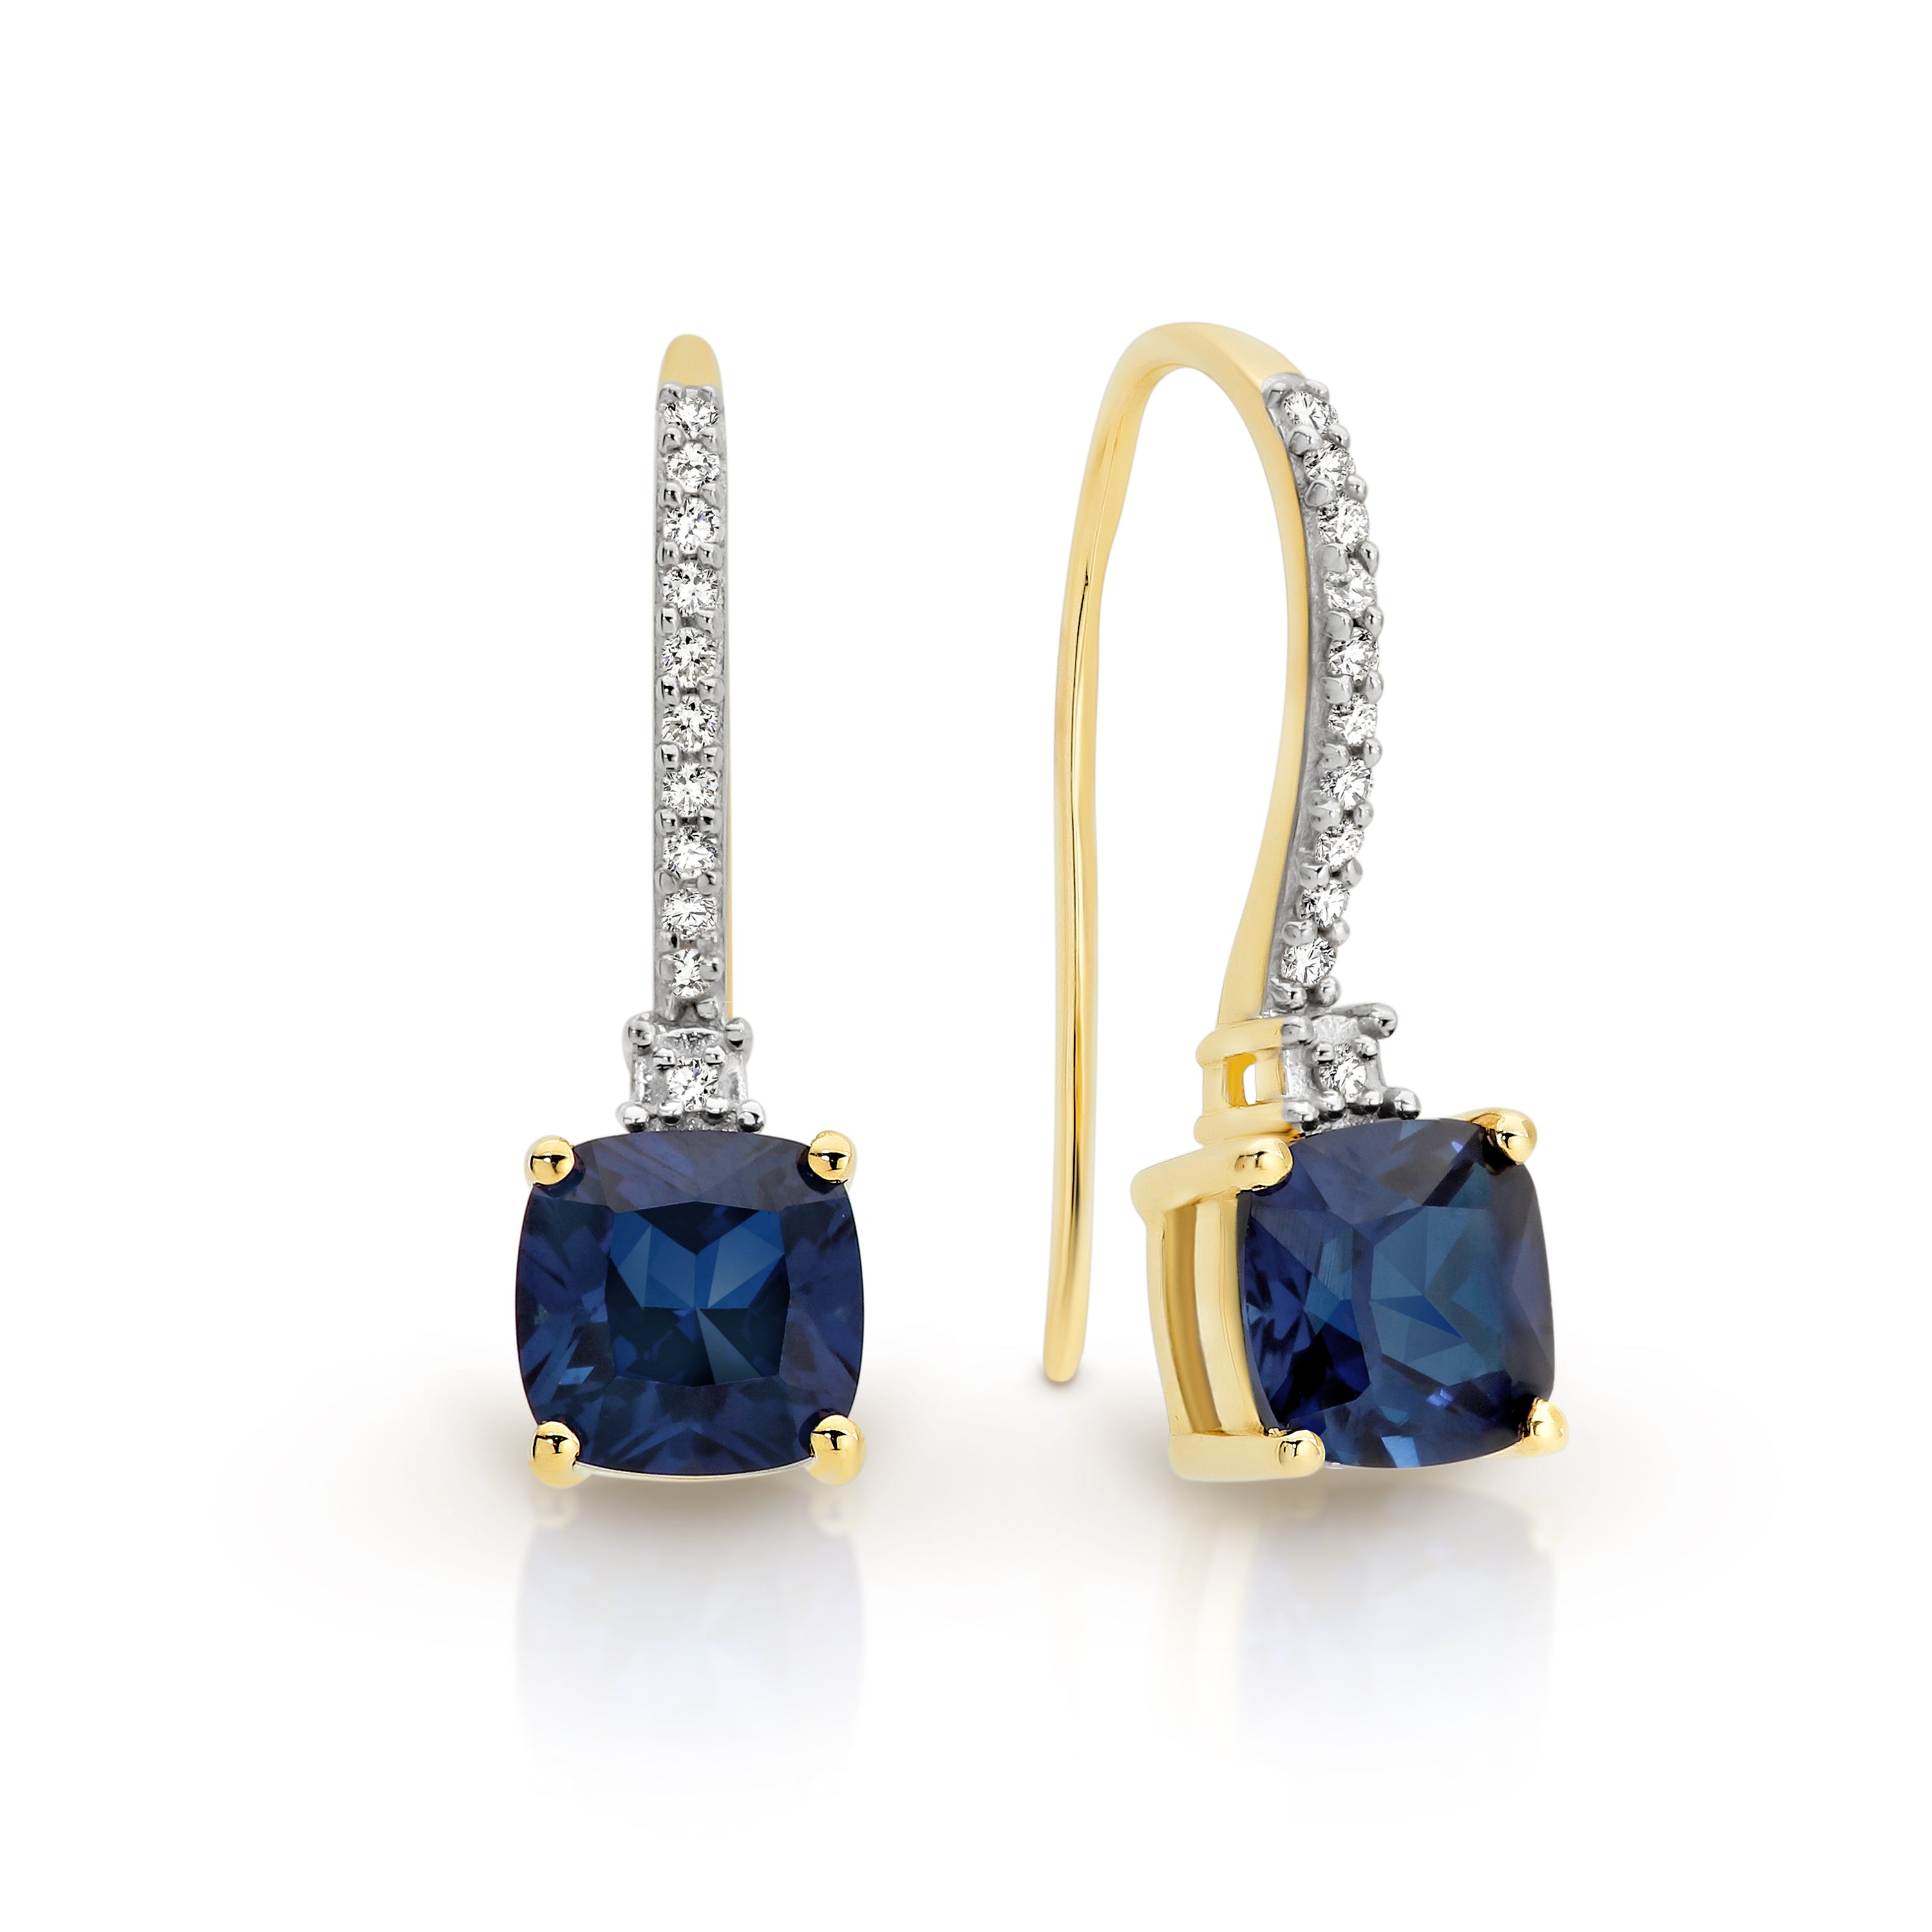 9ct created sapphire & diamond earrings